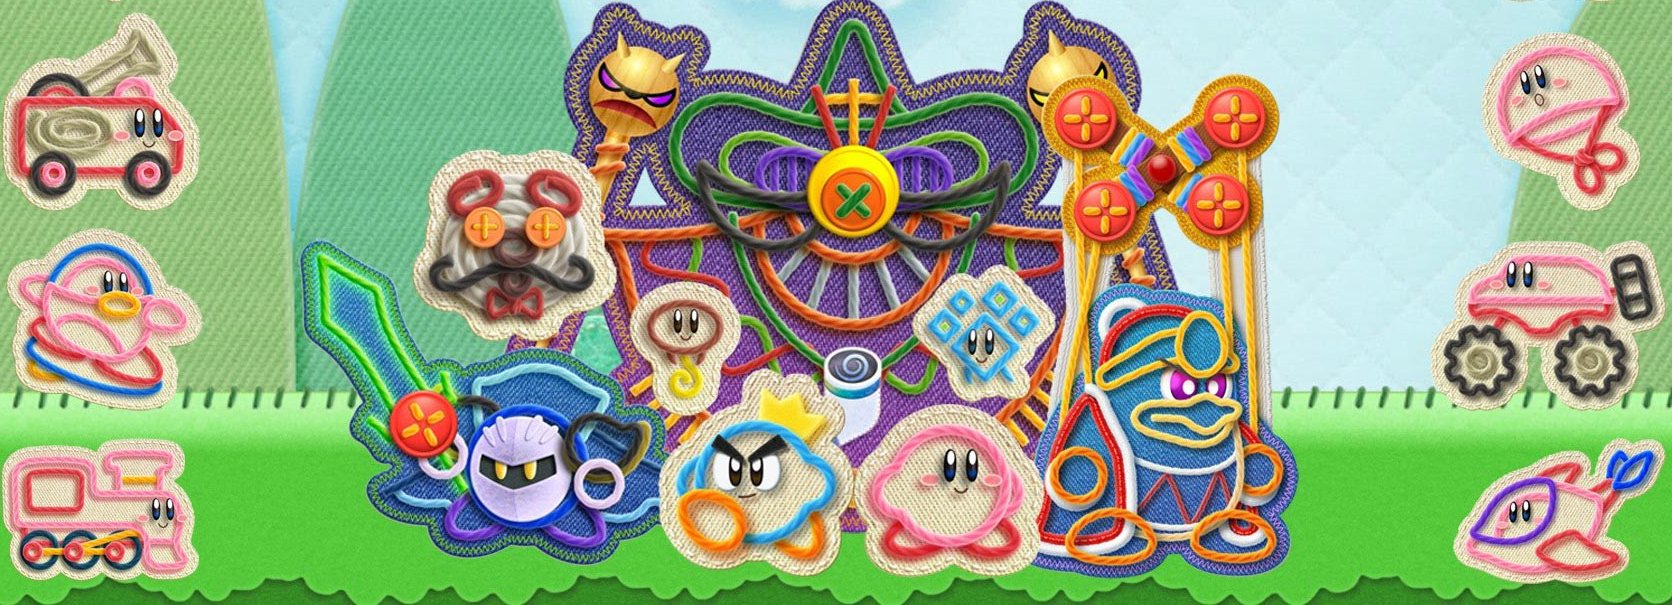 Nintendo Download: Kirby's Epic Yarn – Destructoid